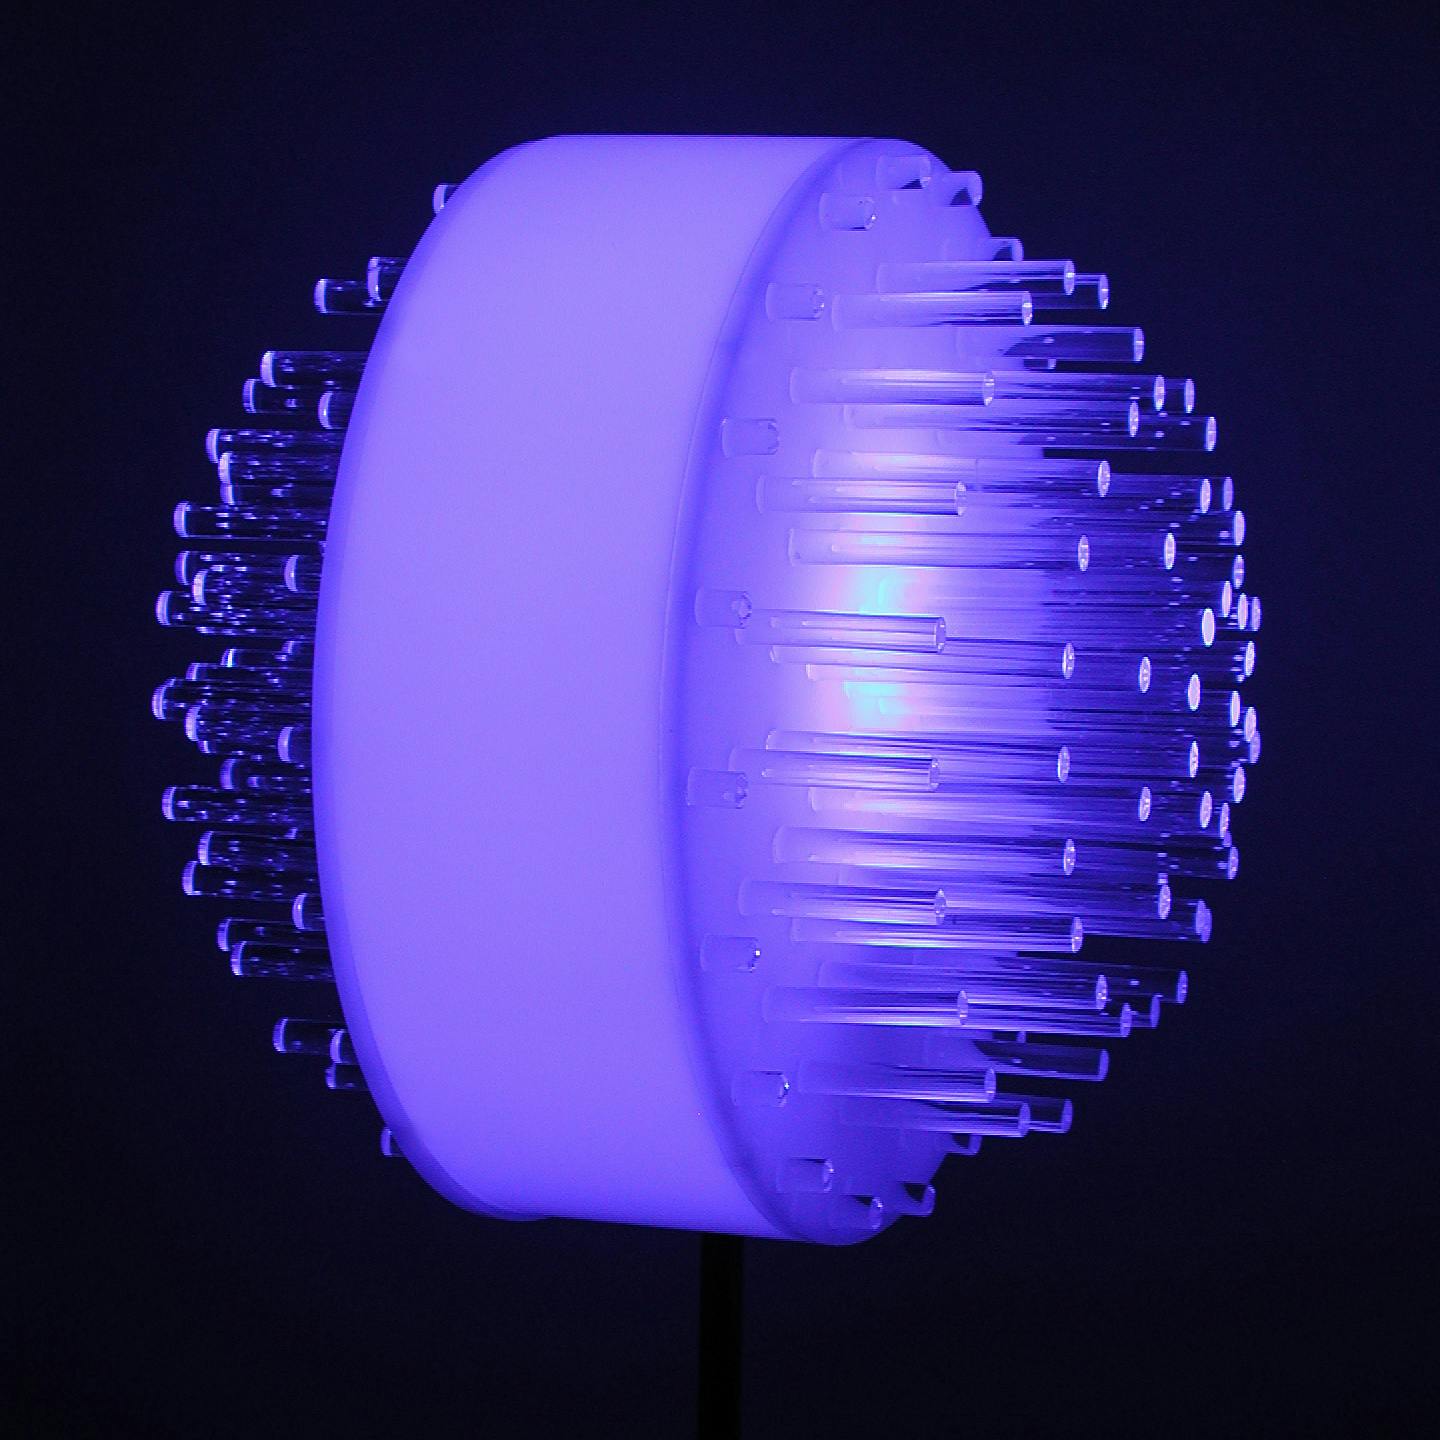 Detail of a purple LED light